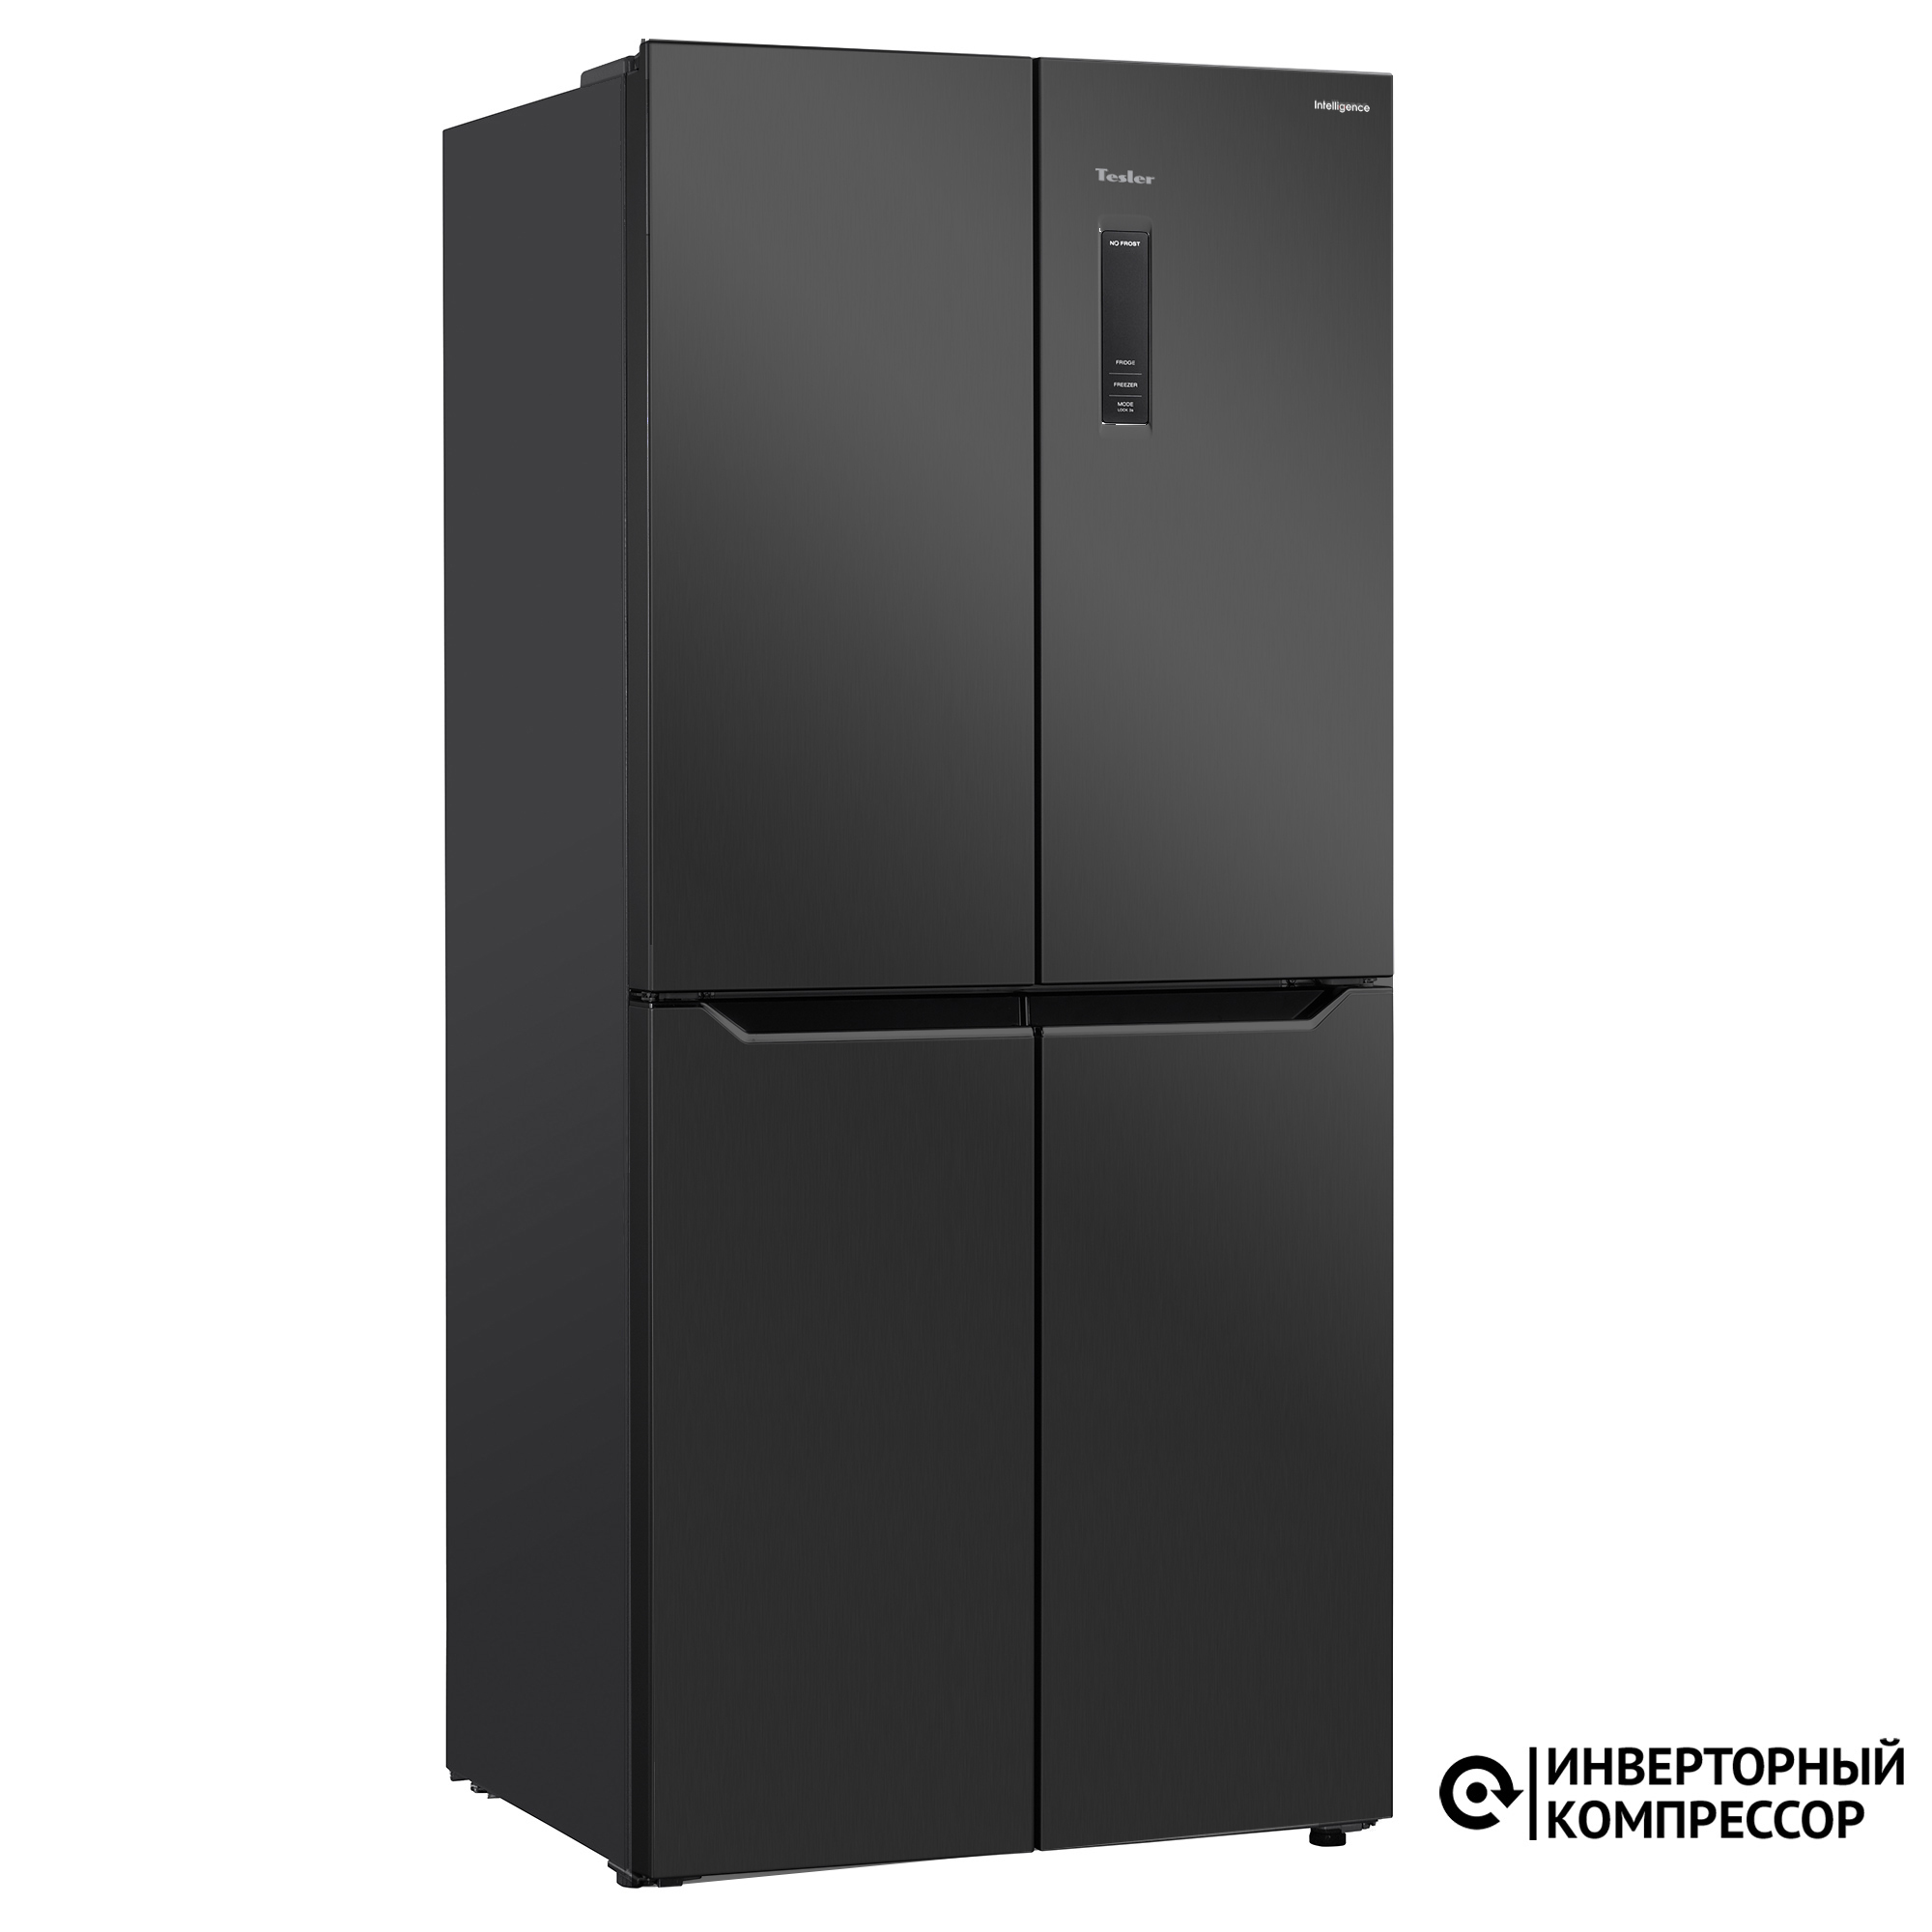 фото Холодильник (side-by-side) tesler rcd-480i graphite